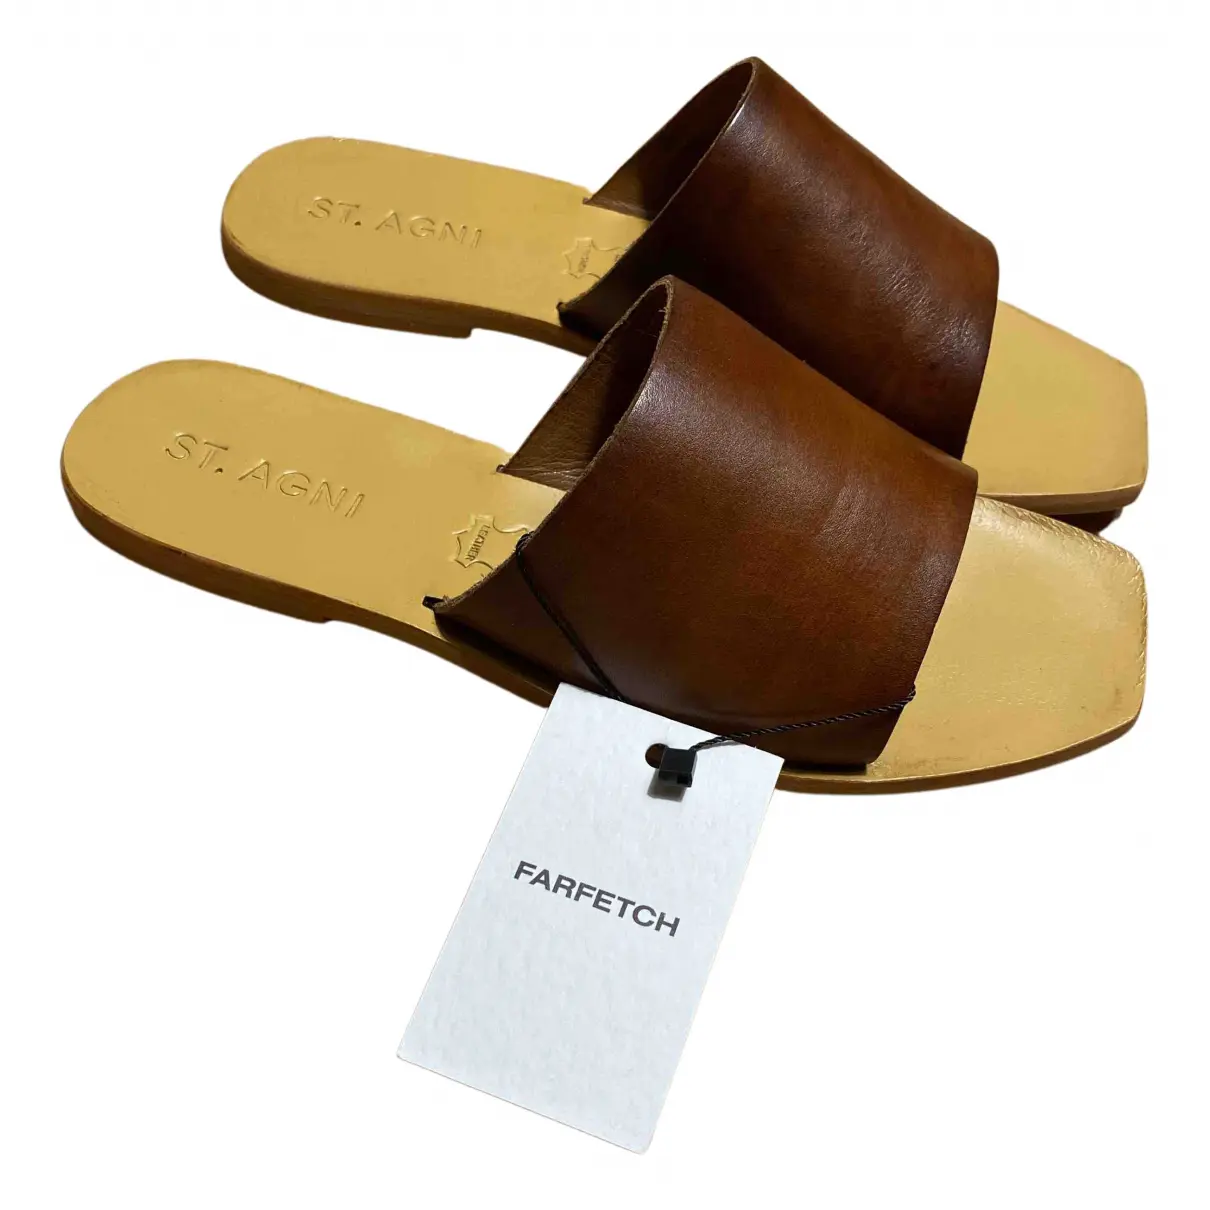 Leather sandal St Agni